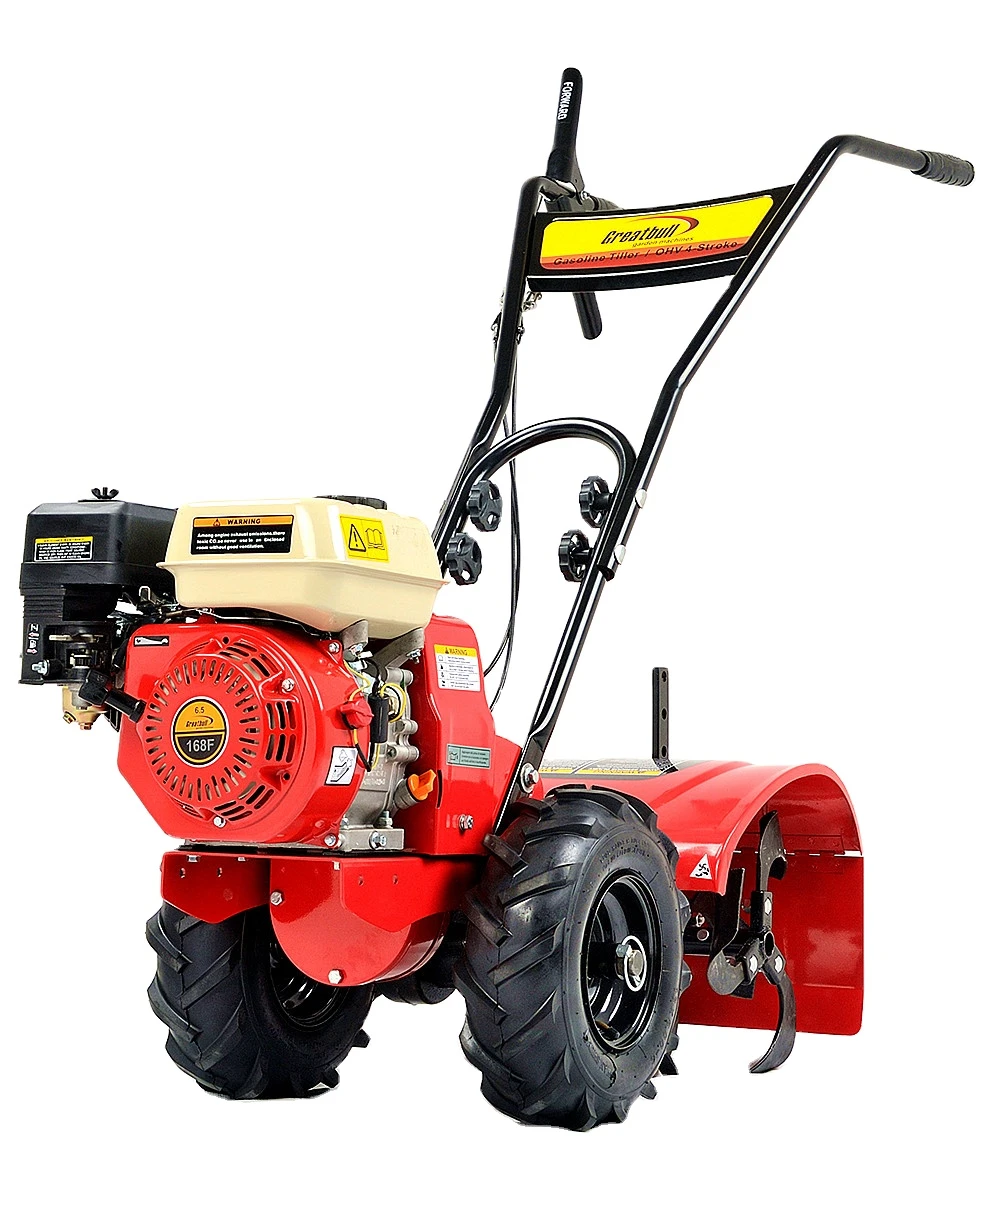 Greatbull 6.5HP Gasoline Power Mini Land Tiller Cultivator with Bearing Drive Hand Garden Rototiller